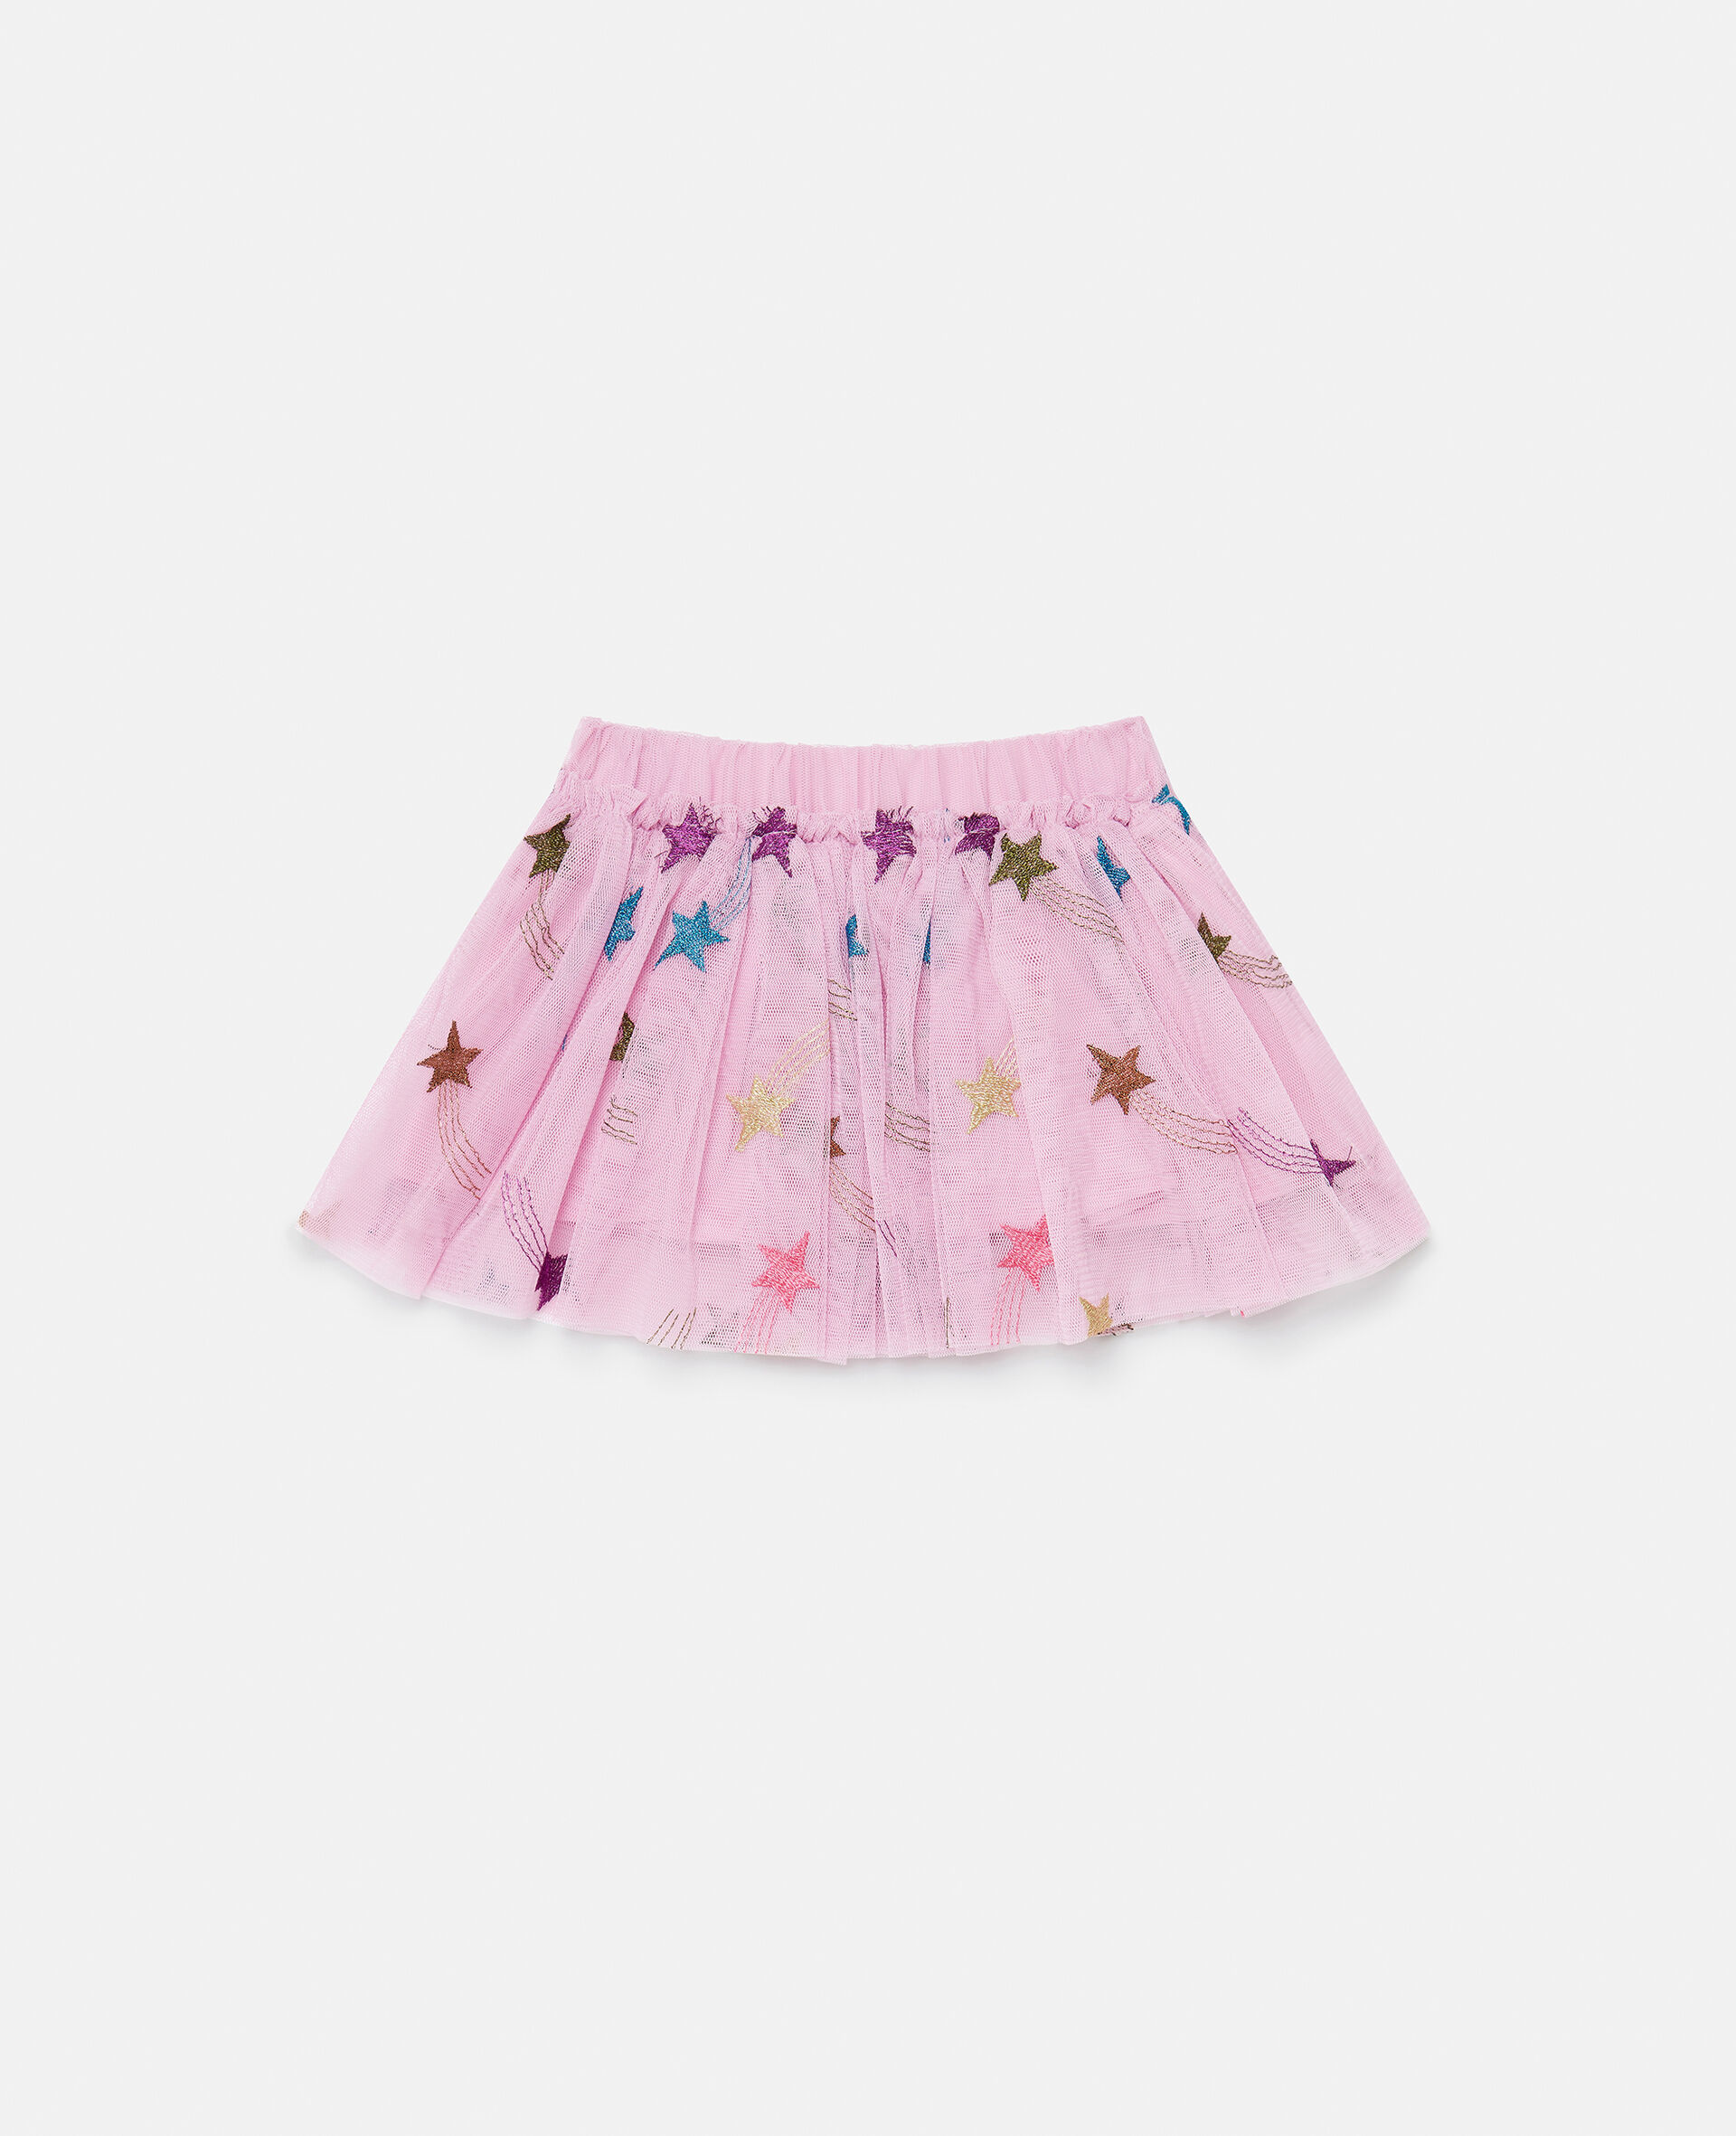 Shooting Stars Embroidered Skirt -Pink-model